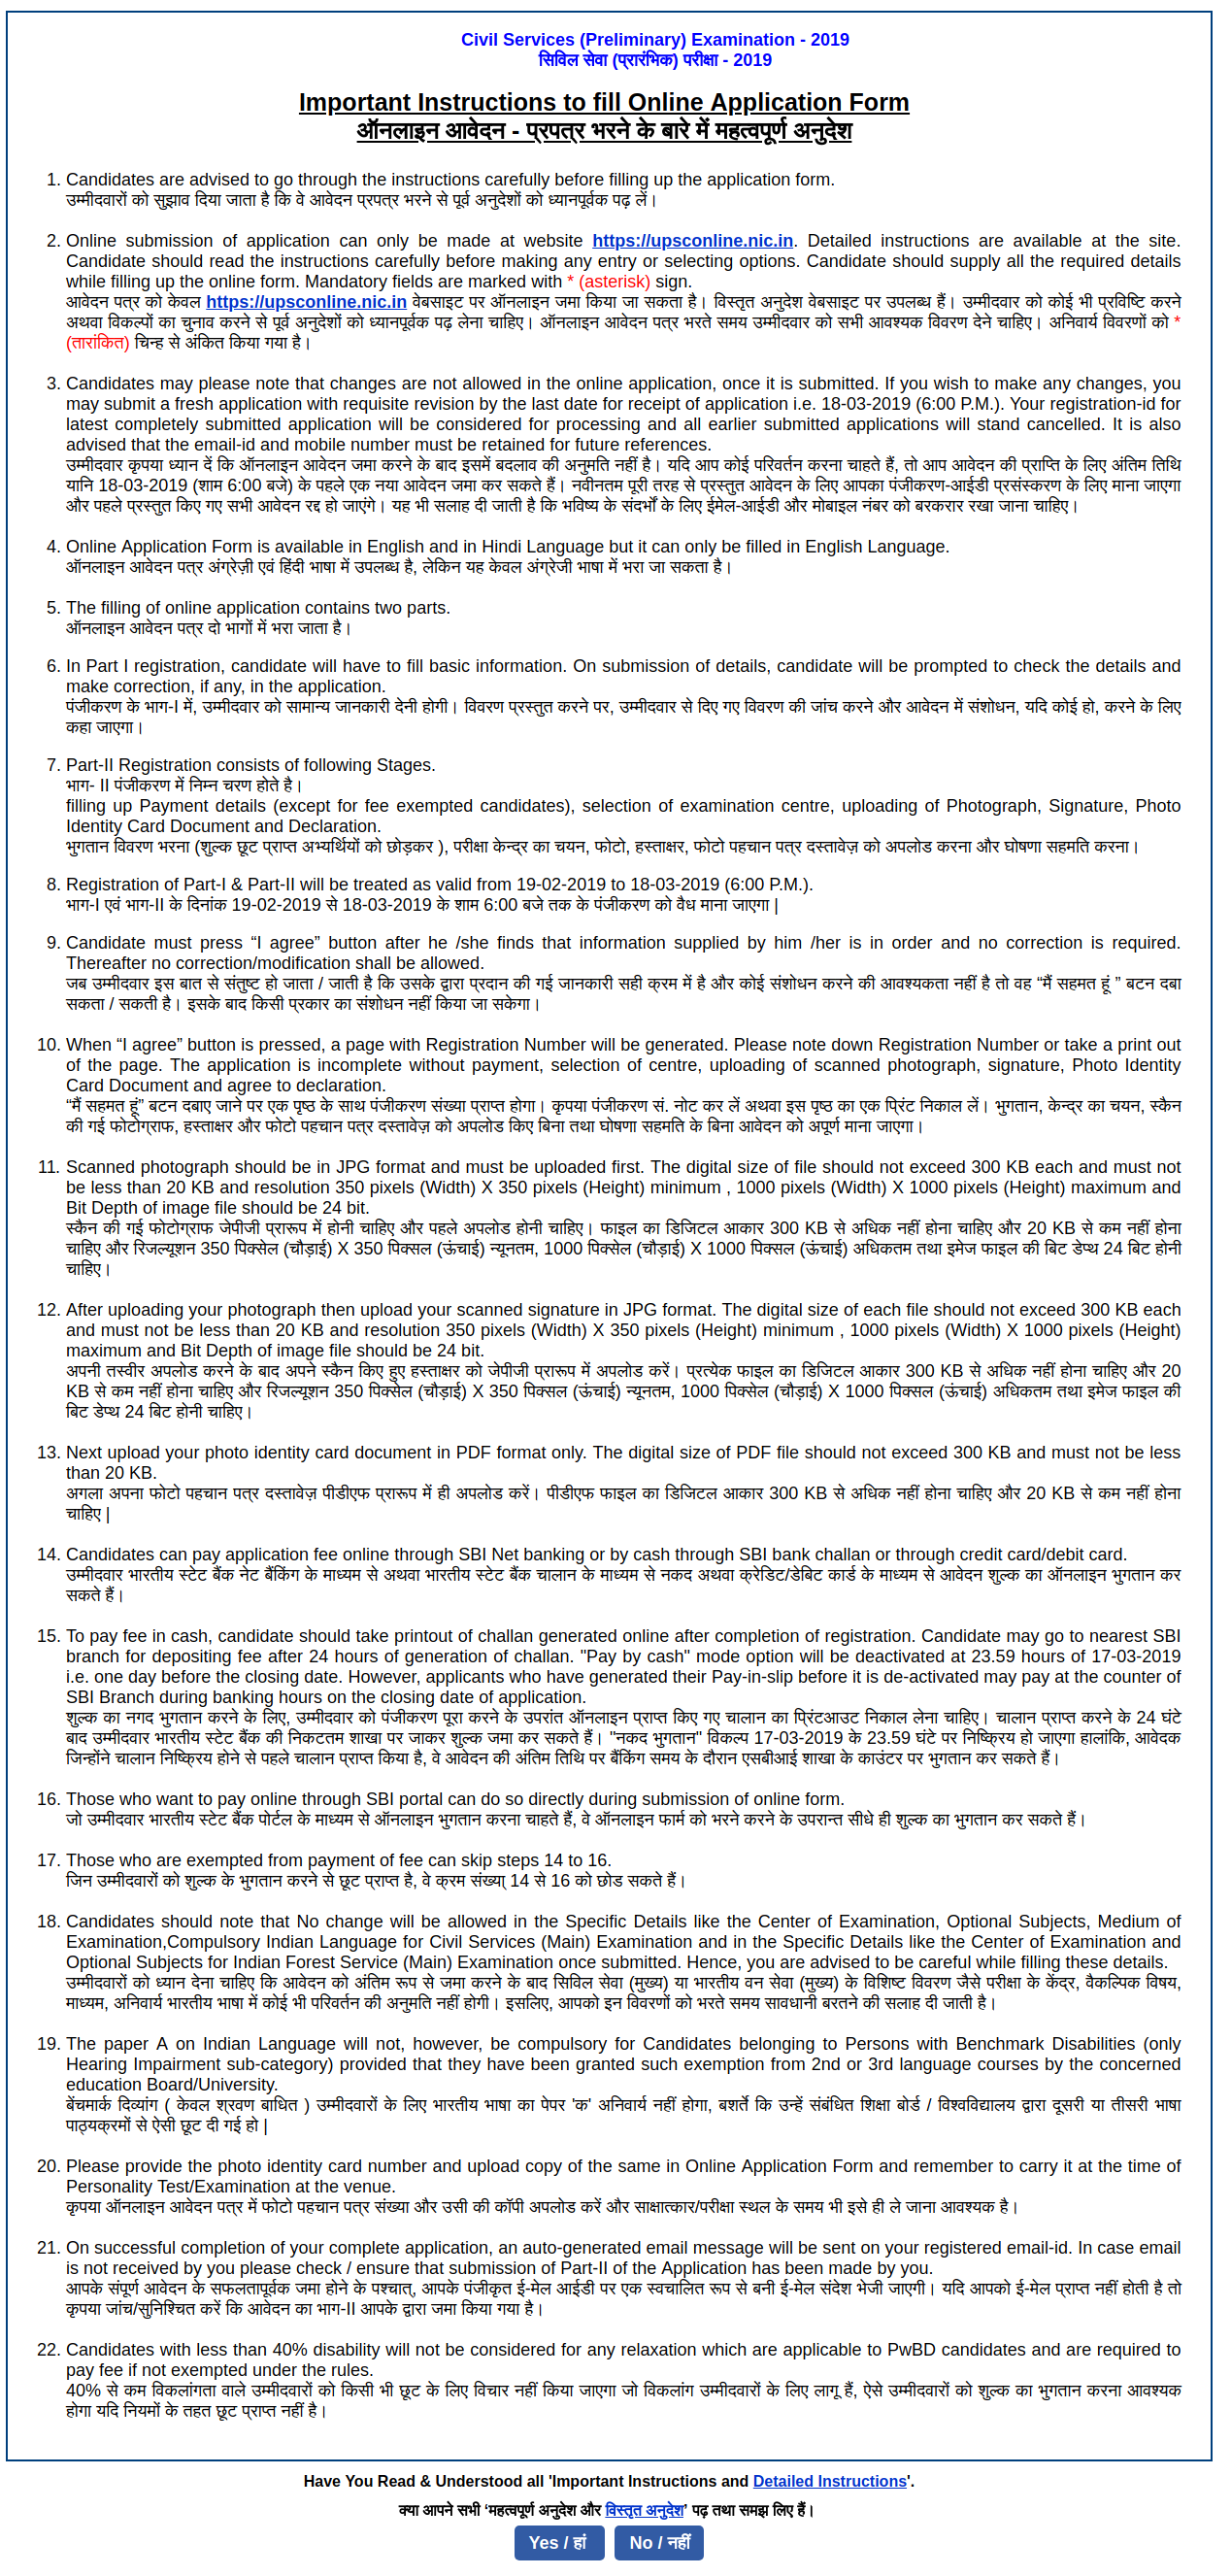 UPSC IAS 2019 - instruction page